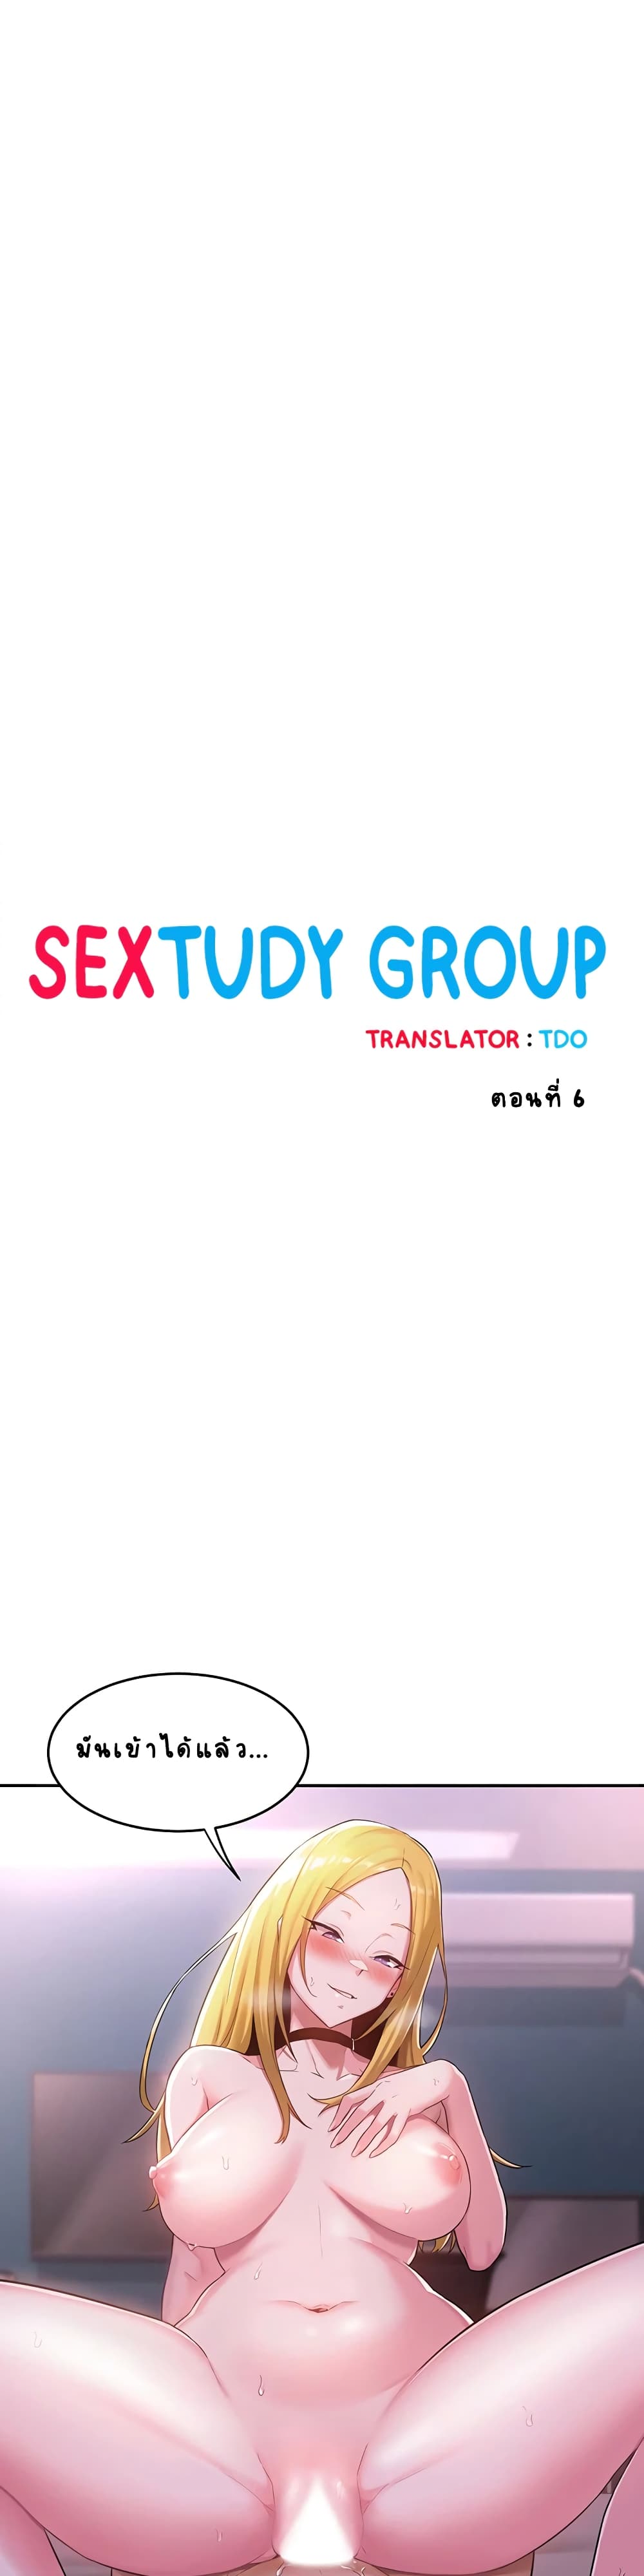 Sextudy Group